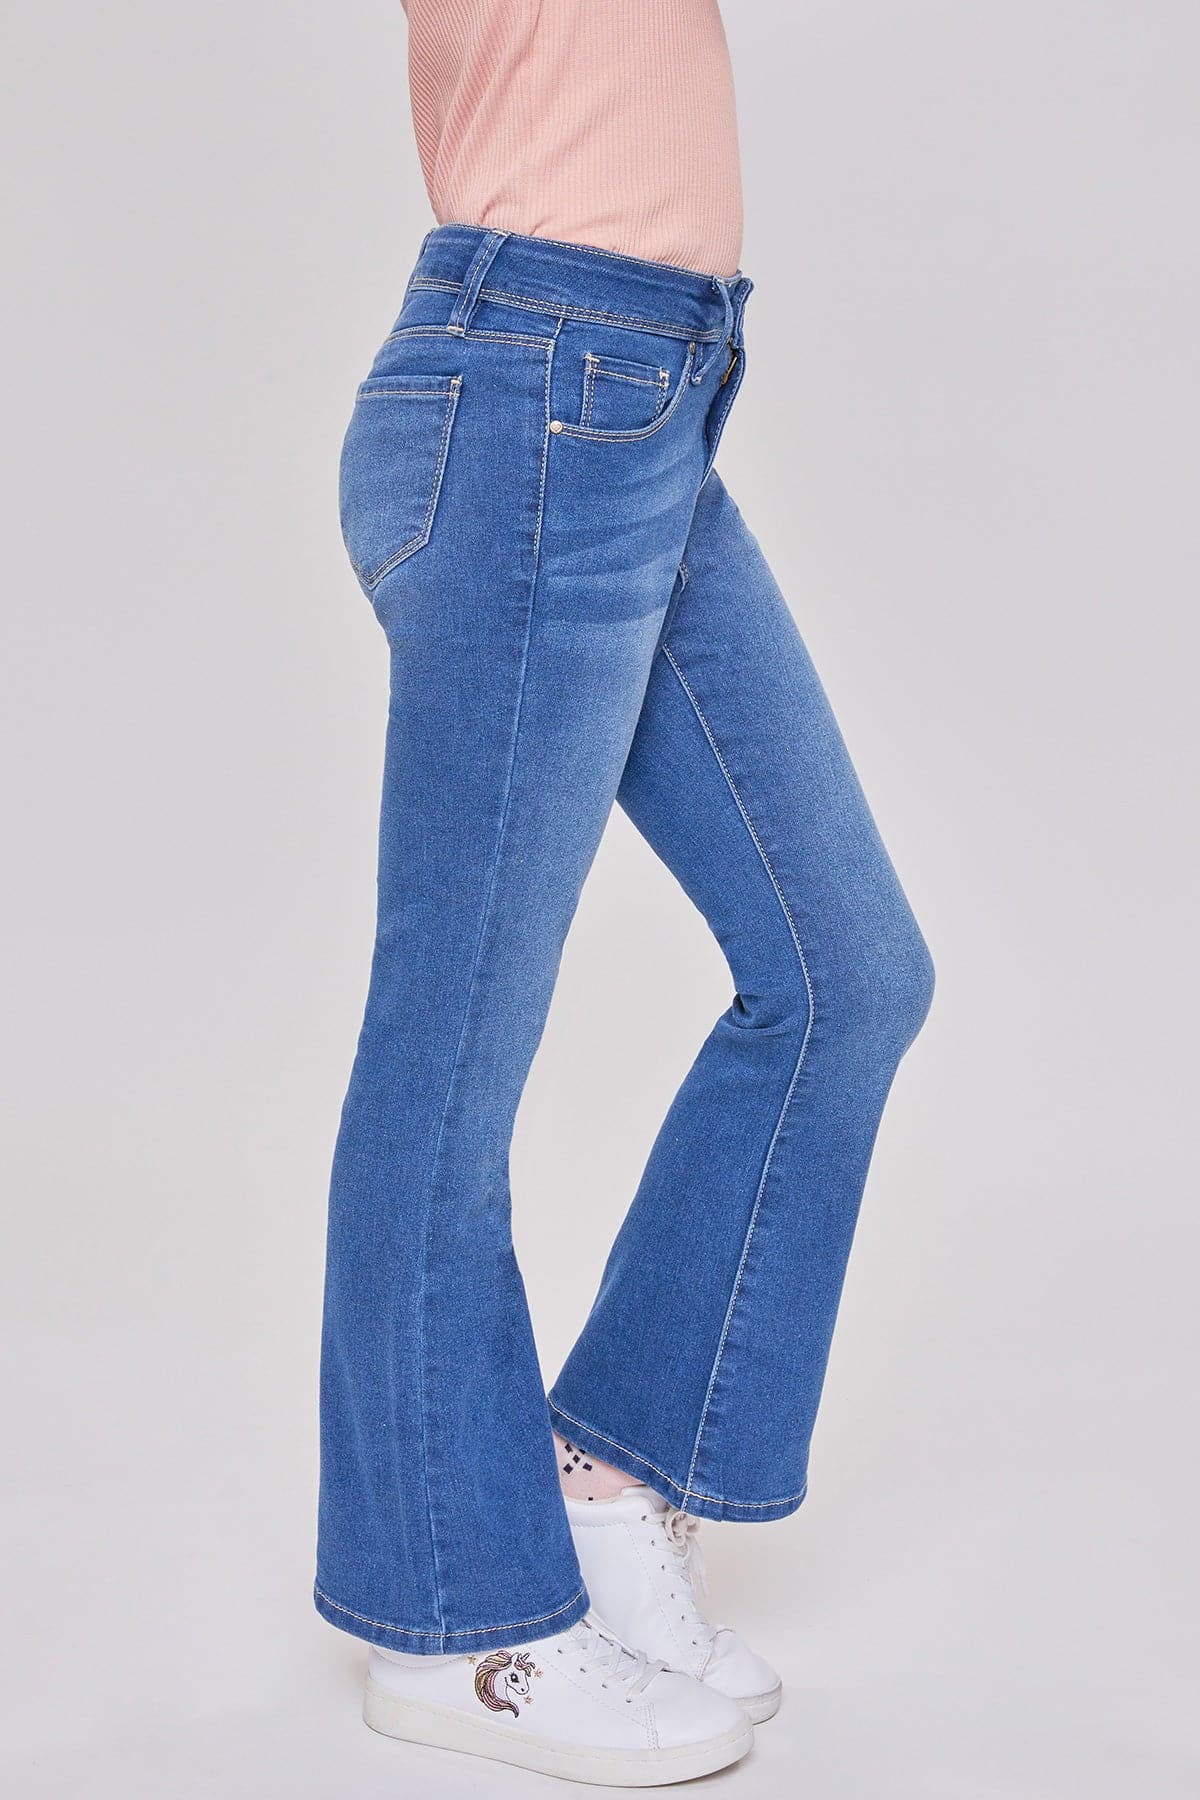 Girls Bell Bottom Essential Clean Hem Jeans from YMI GIRLS – YMI JEANS